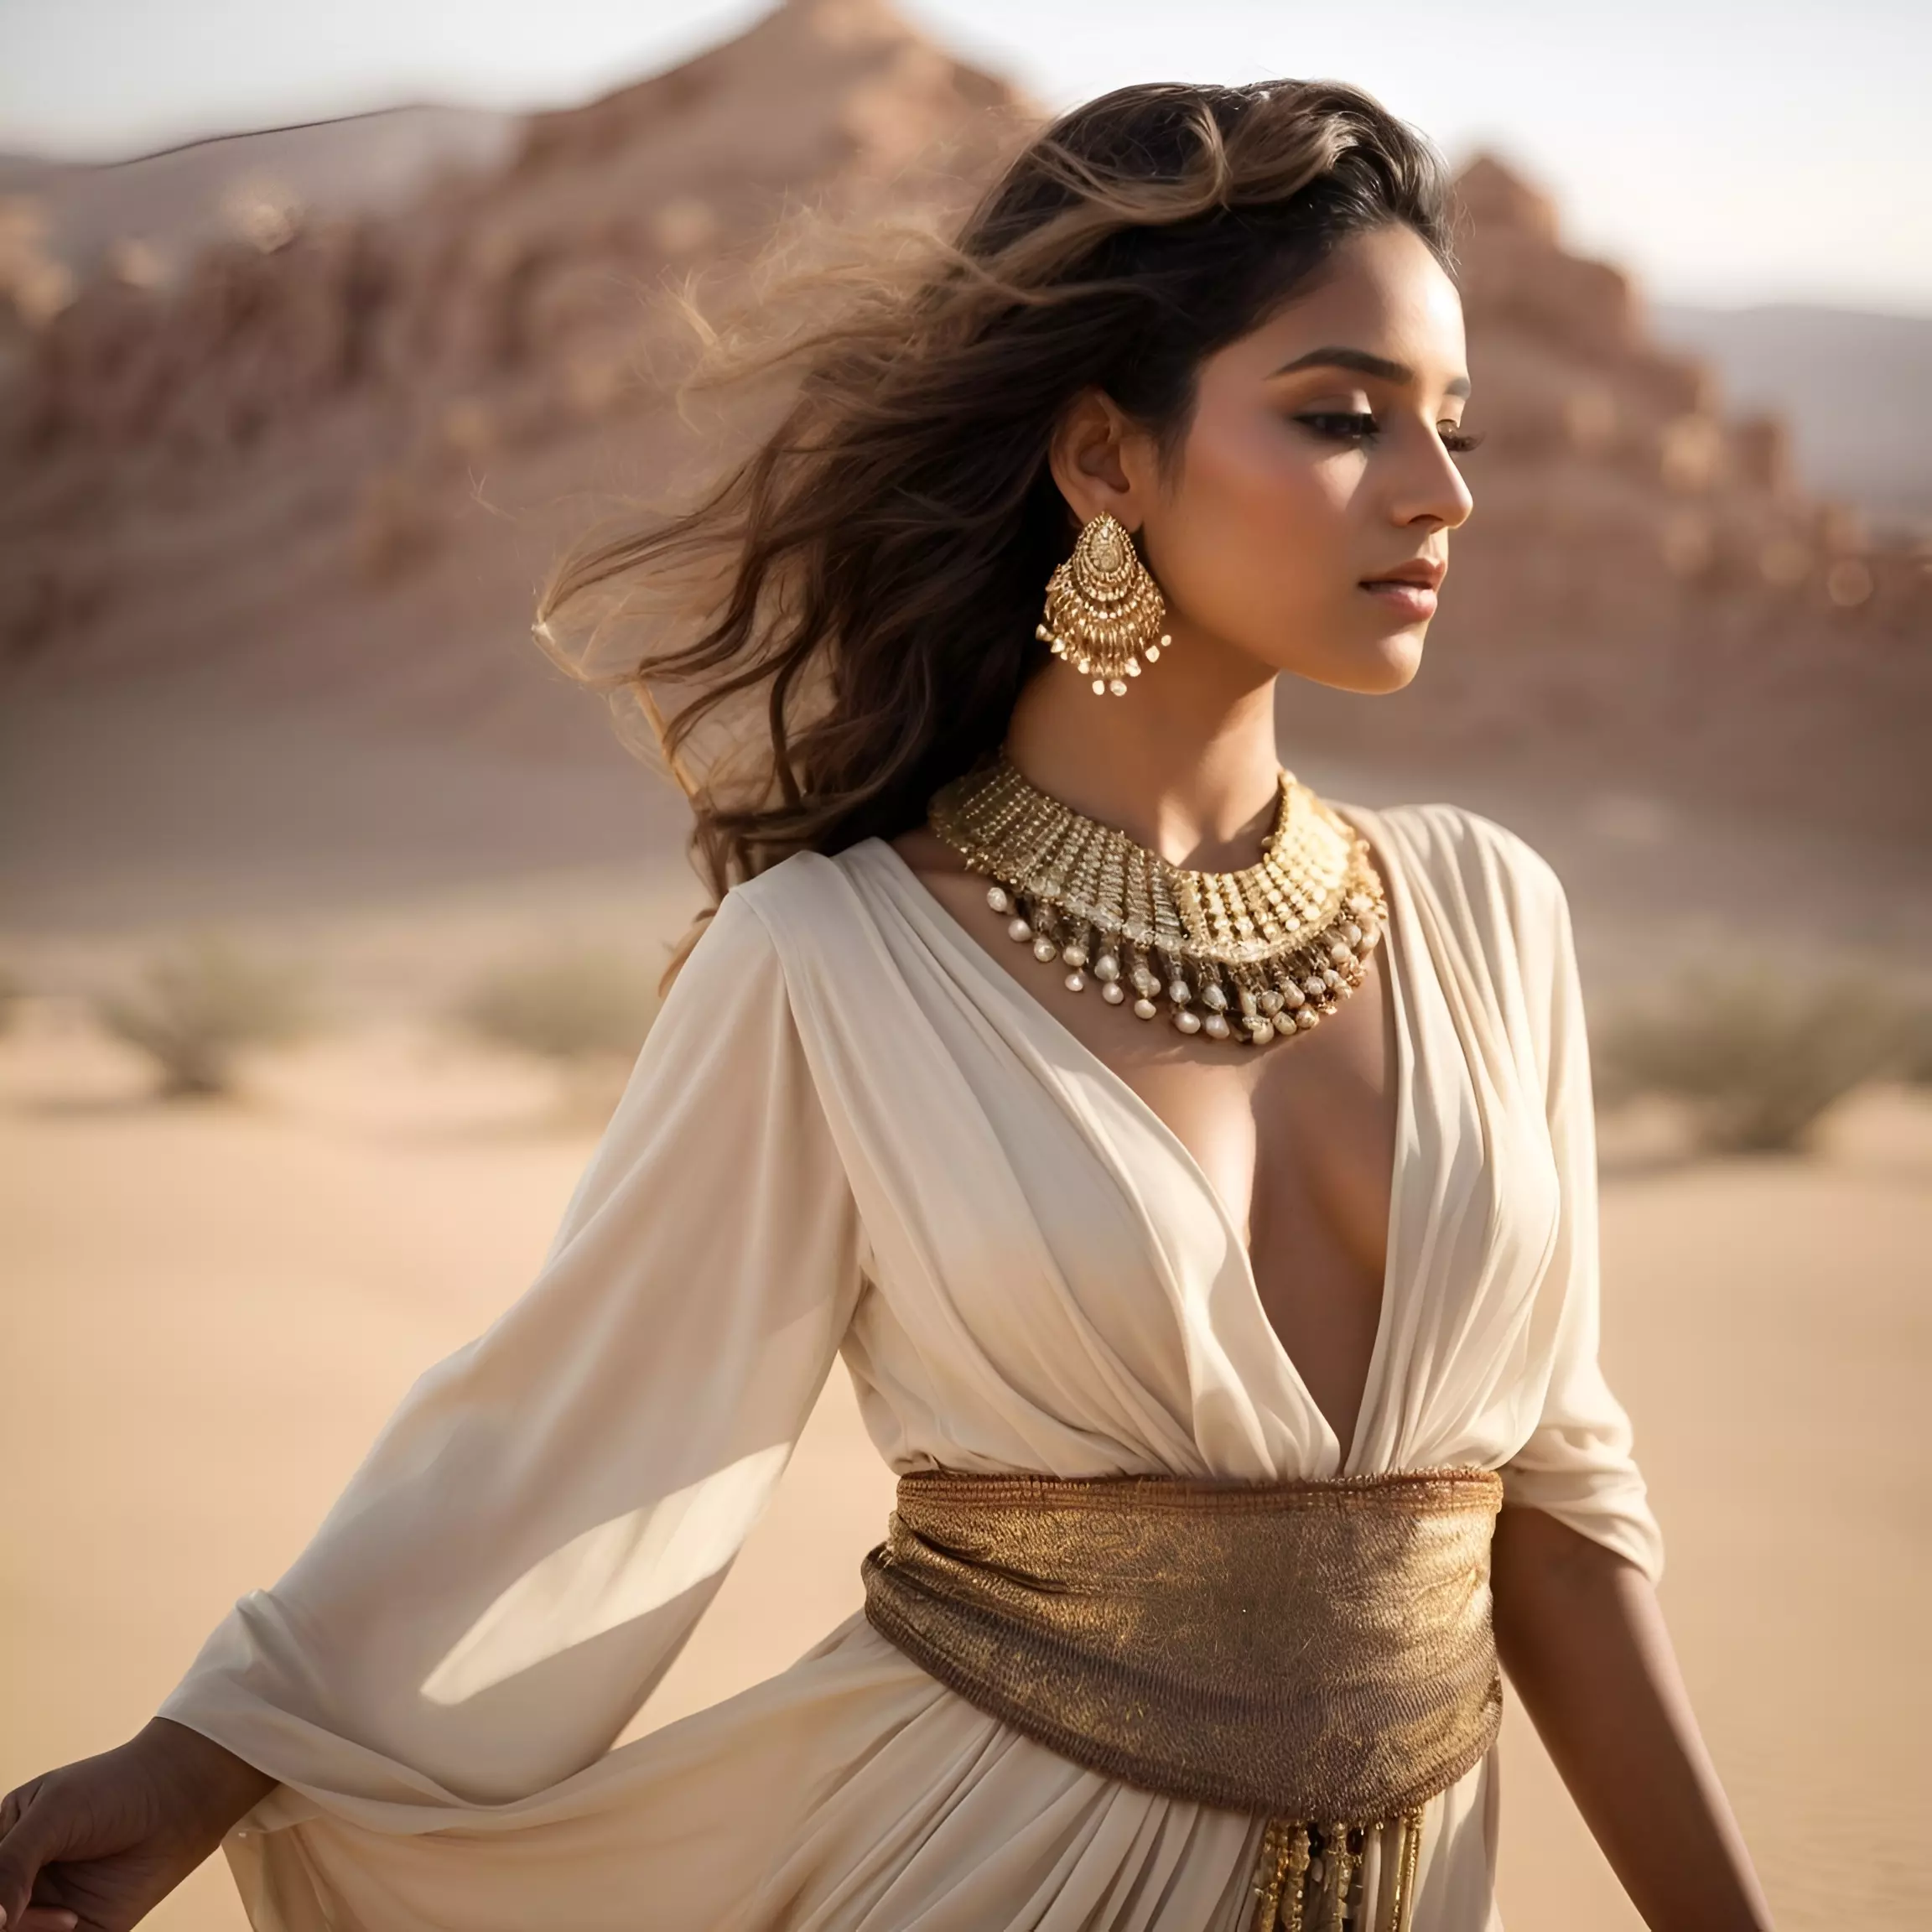 Woman in the desert